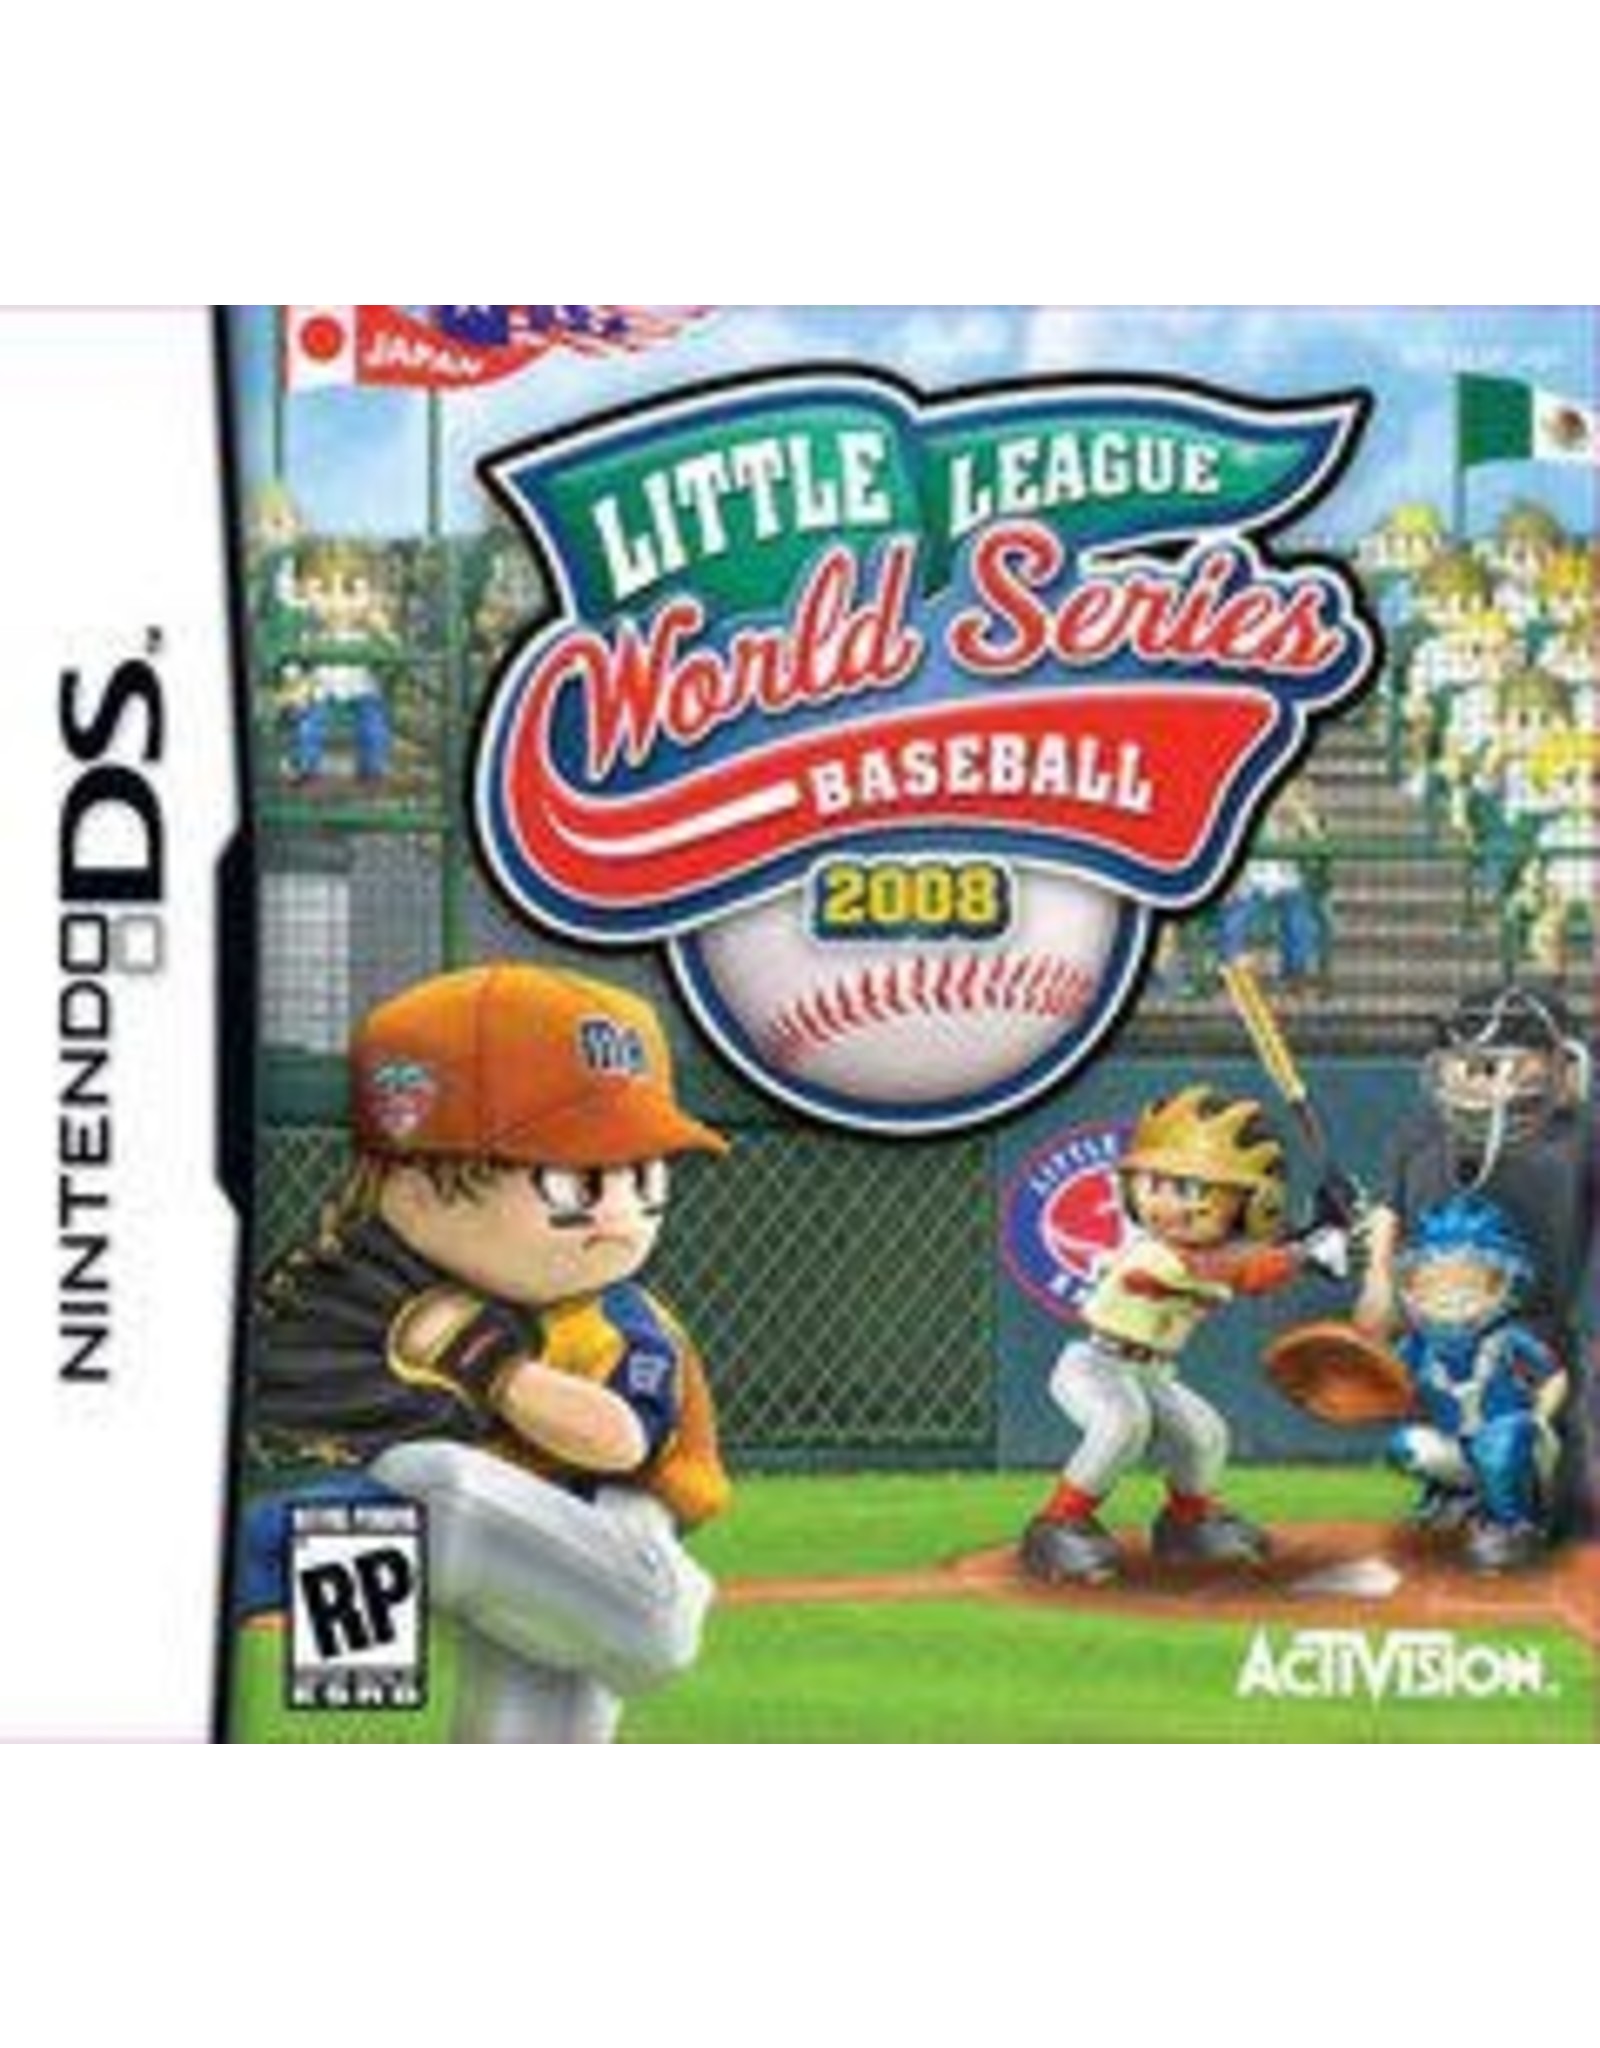 Nintendo DS Little League World Series Baseball 2008 (CiB)